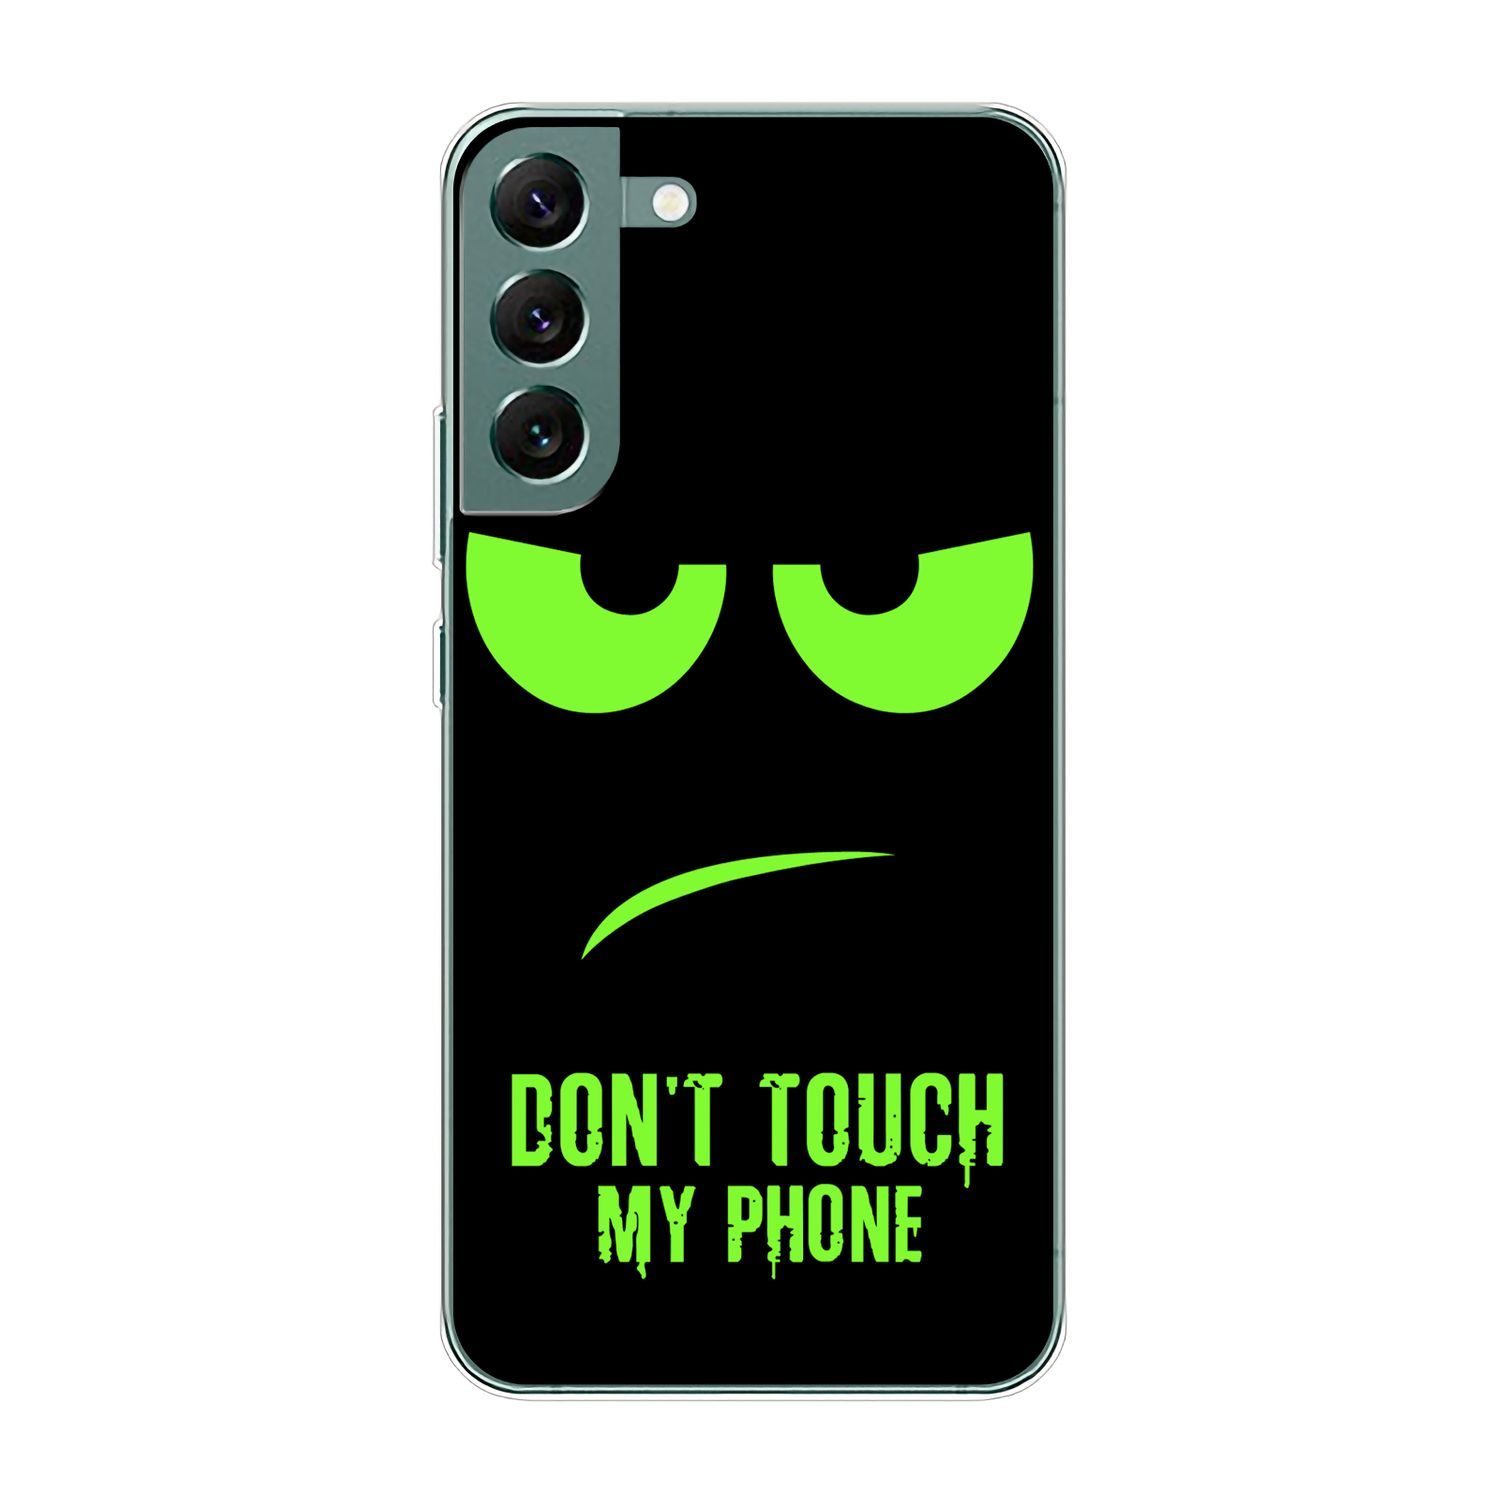 KÖNIG DESIGN Case, Backcover, Plus Phone Galaxy Grün 5G, Samsung, Touch Dont My S22